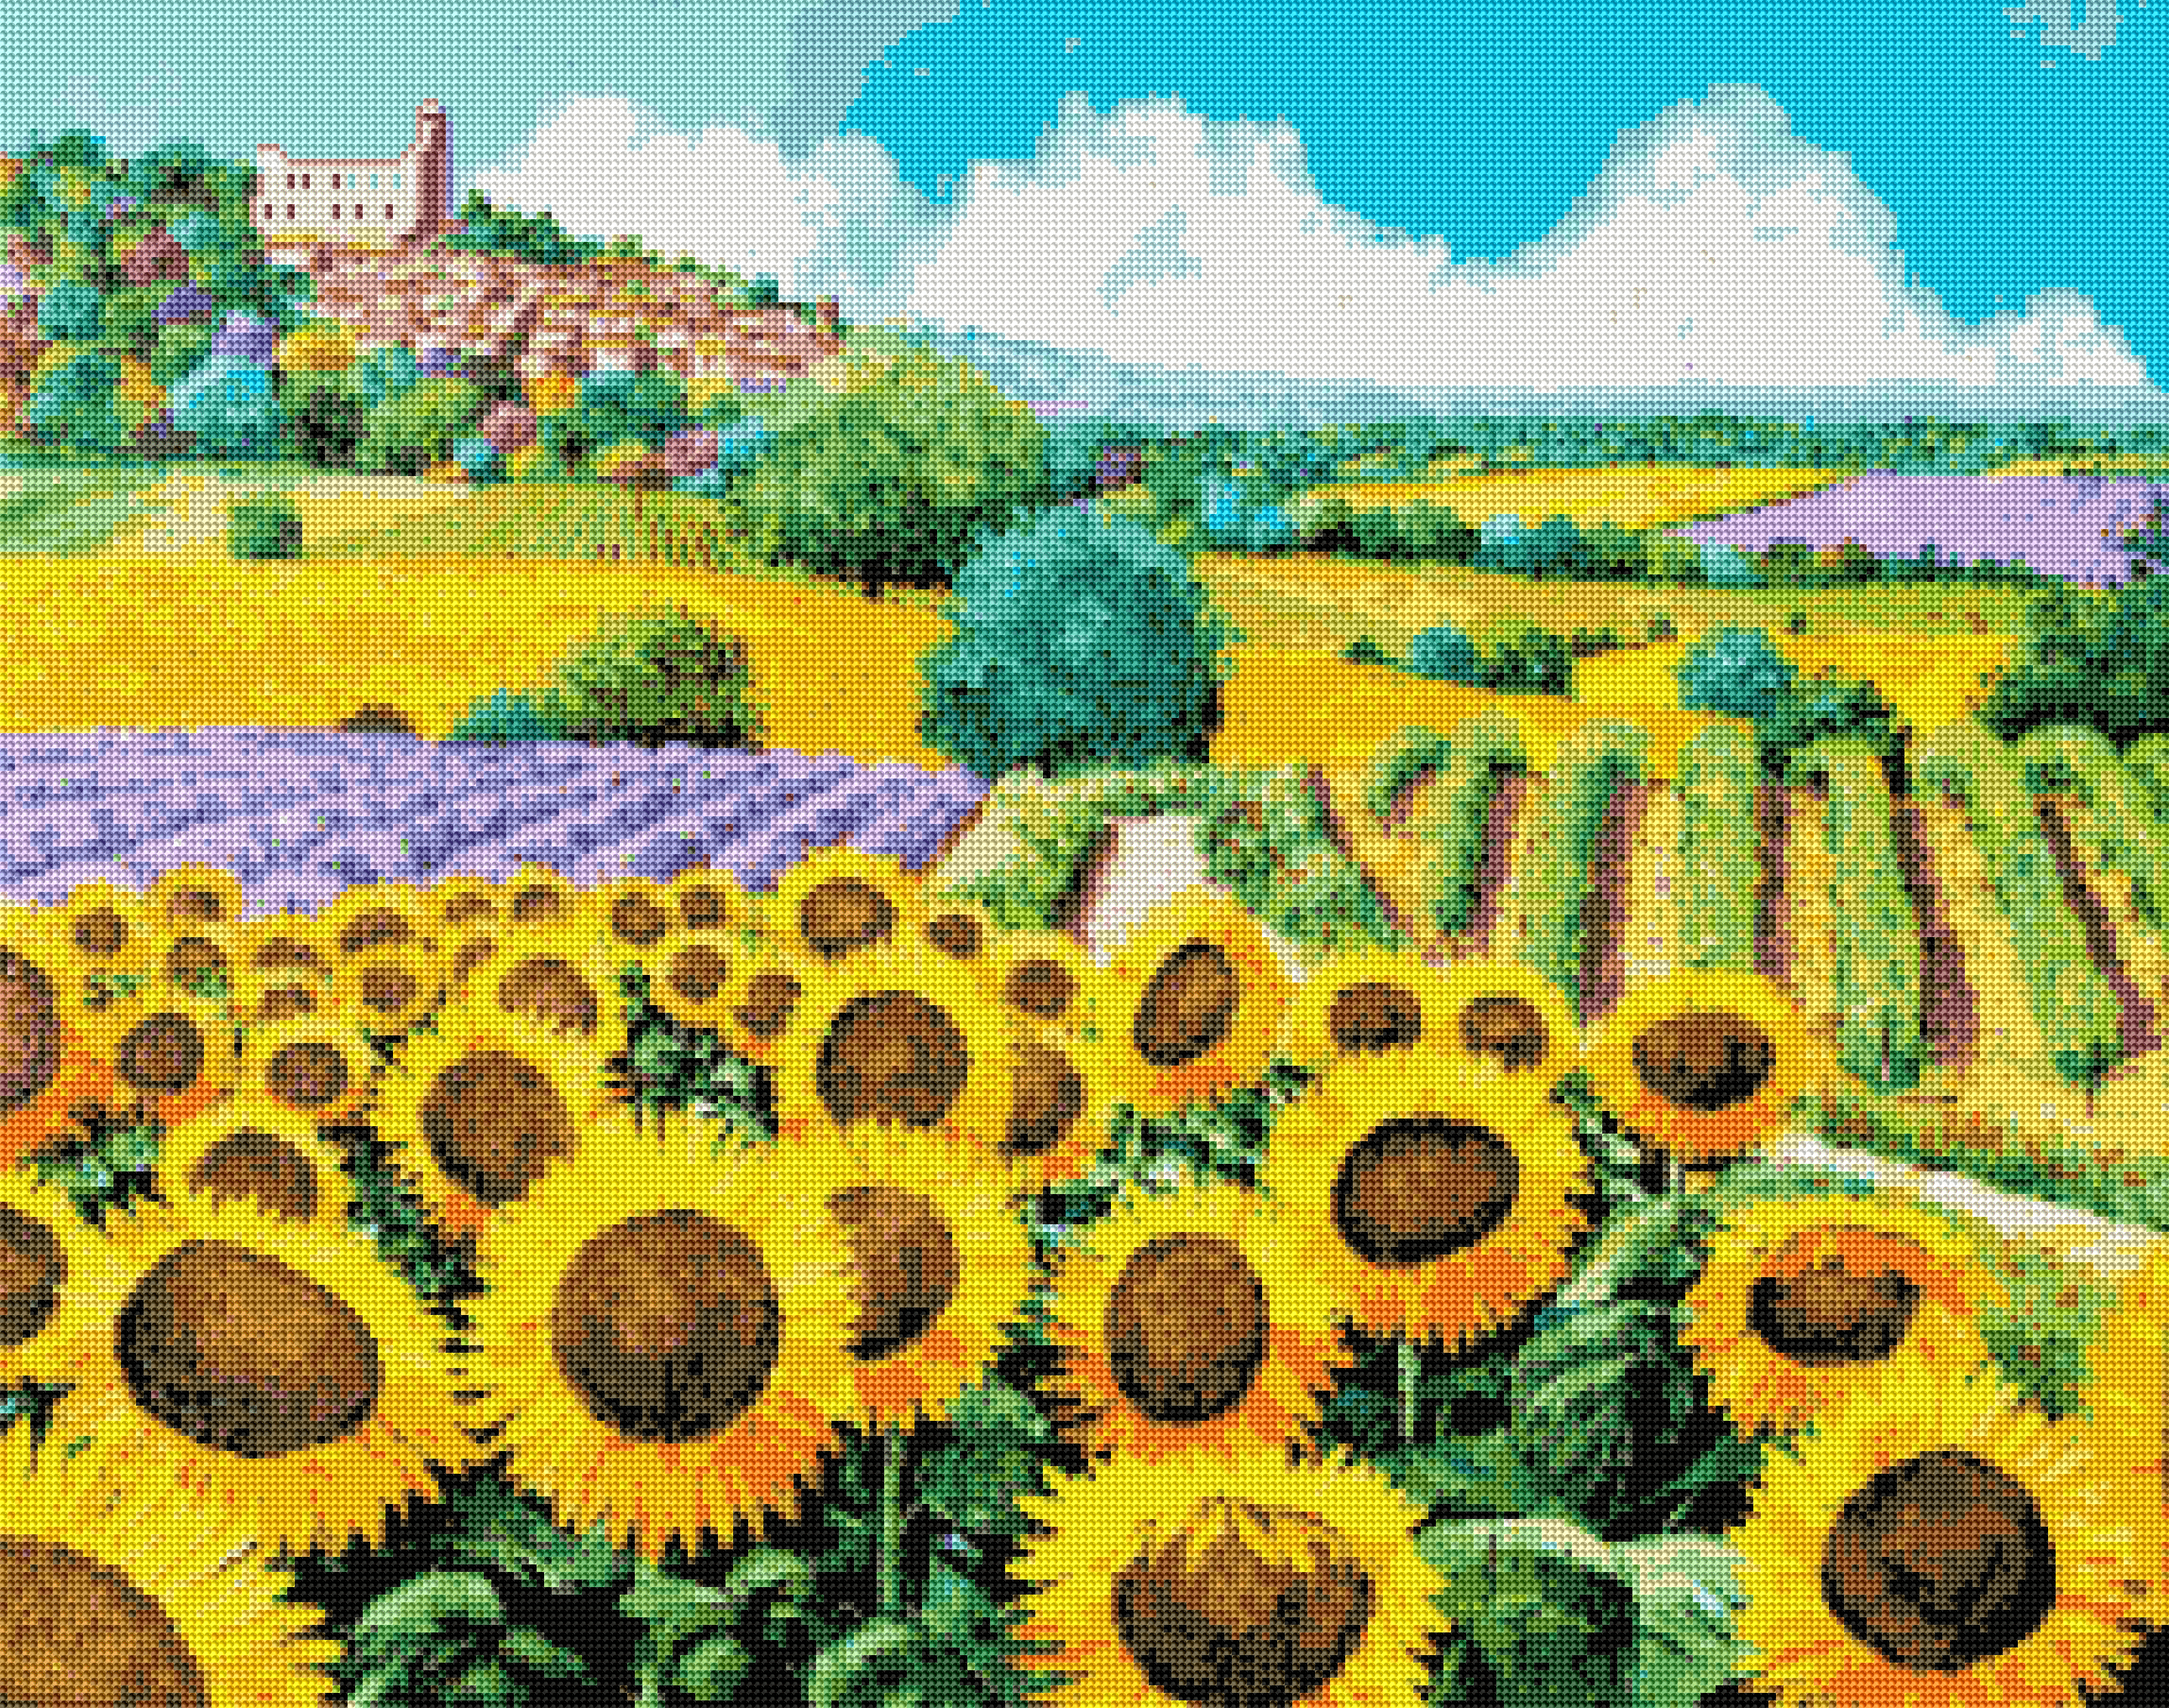 Vineyards and Sunflowers Oraloa.